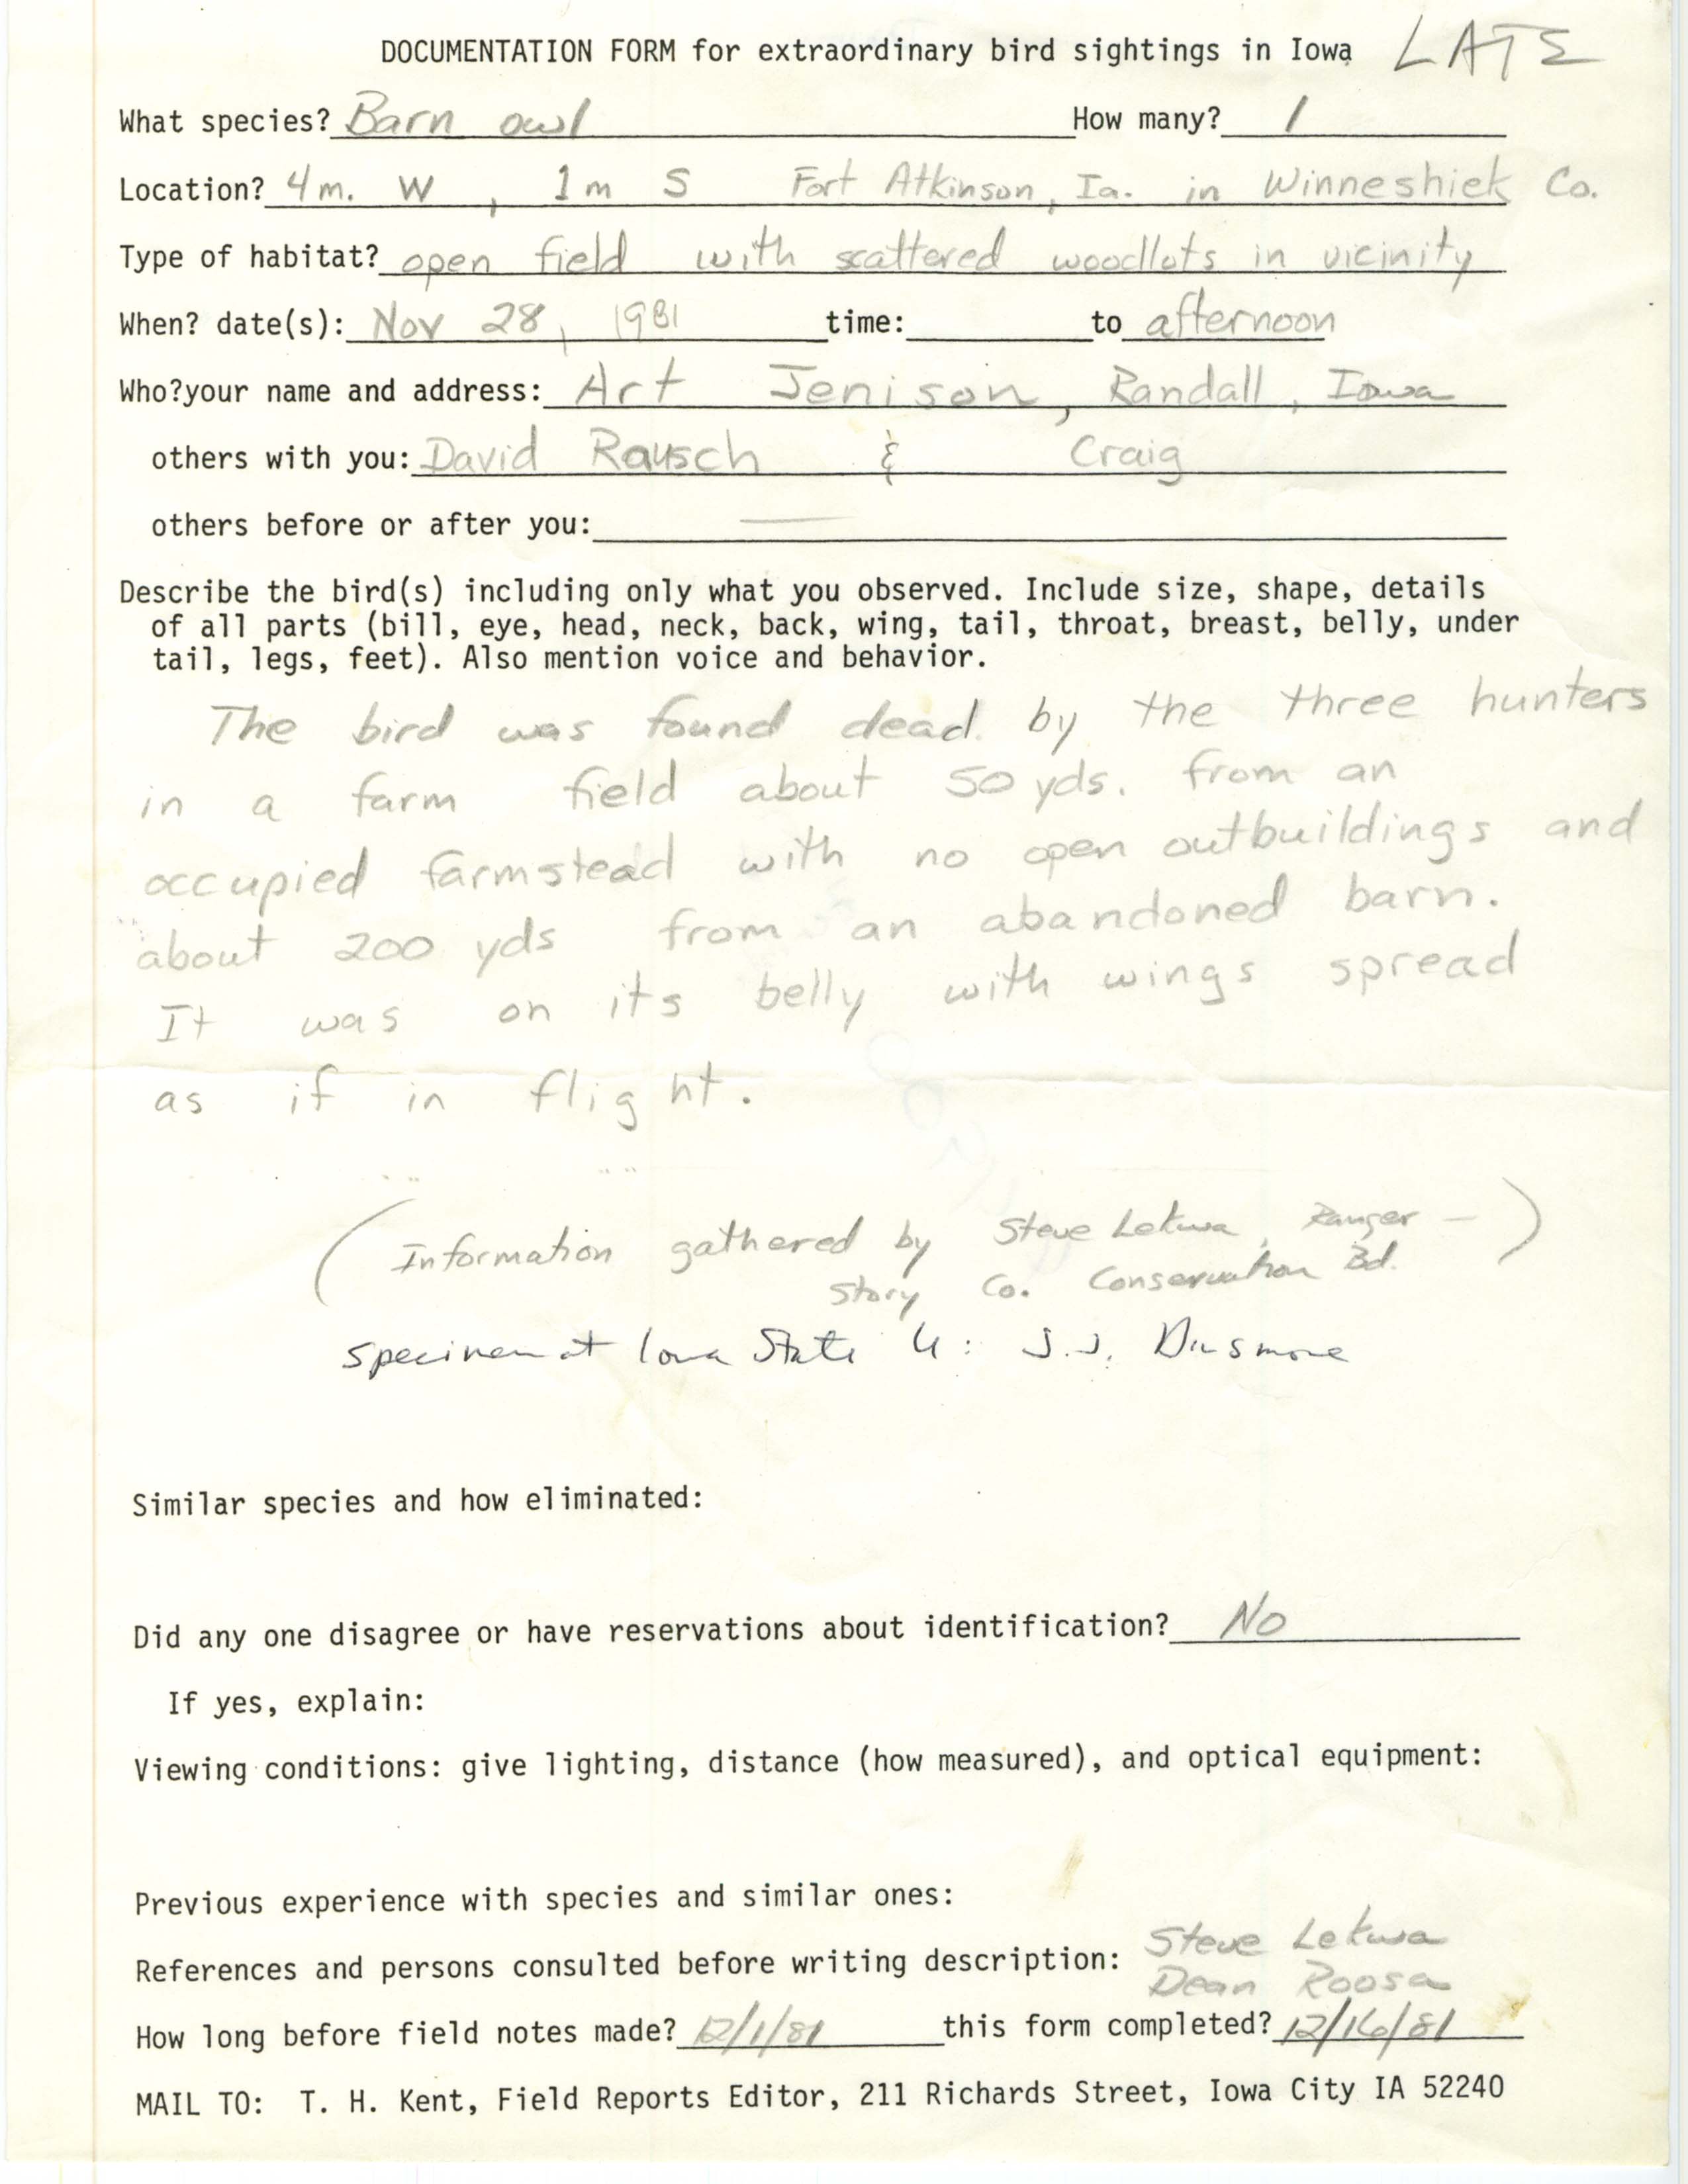 Rare bird documentation form for Barn Owl near Fort Atkinson in 1981